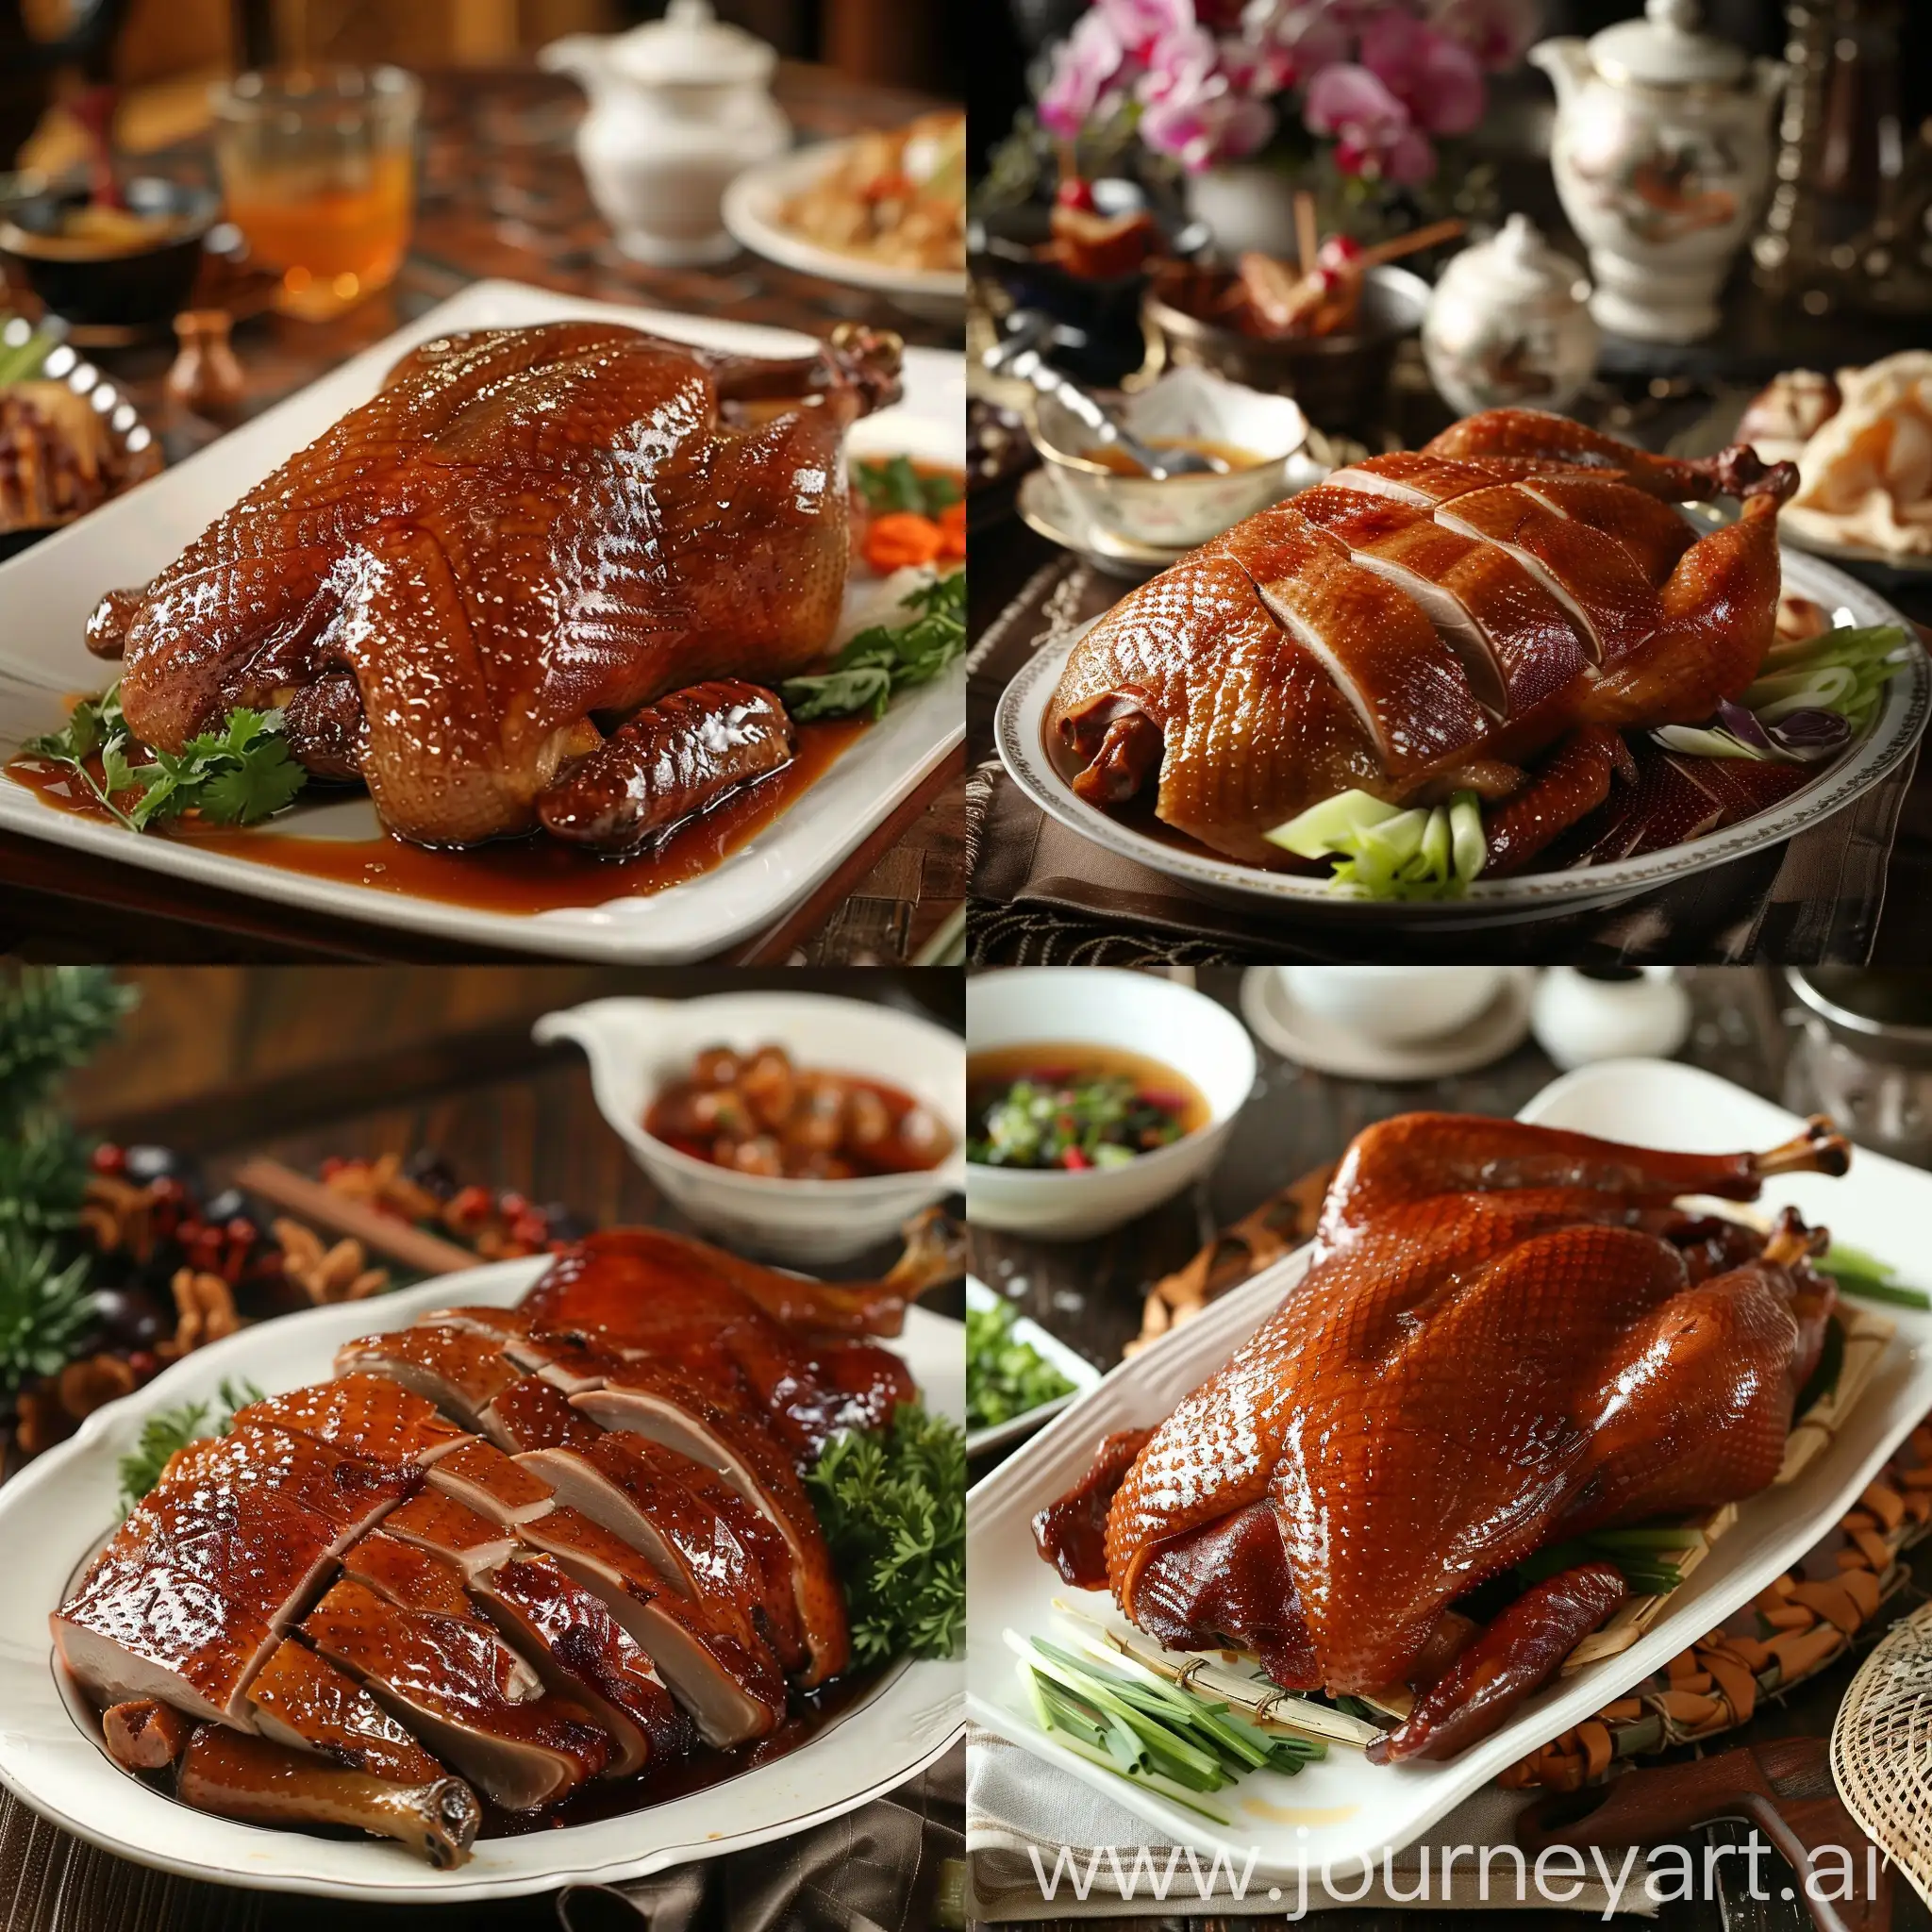 Beijing-Roast-Duck-Authentic-Ancient-Recipe-Delivers-Delicious-and-Healthier-Taste